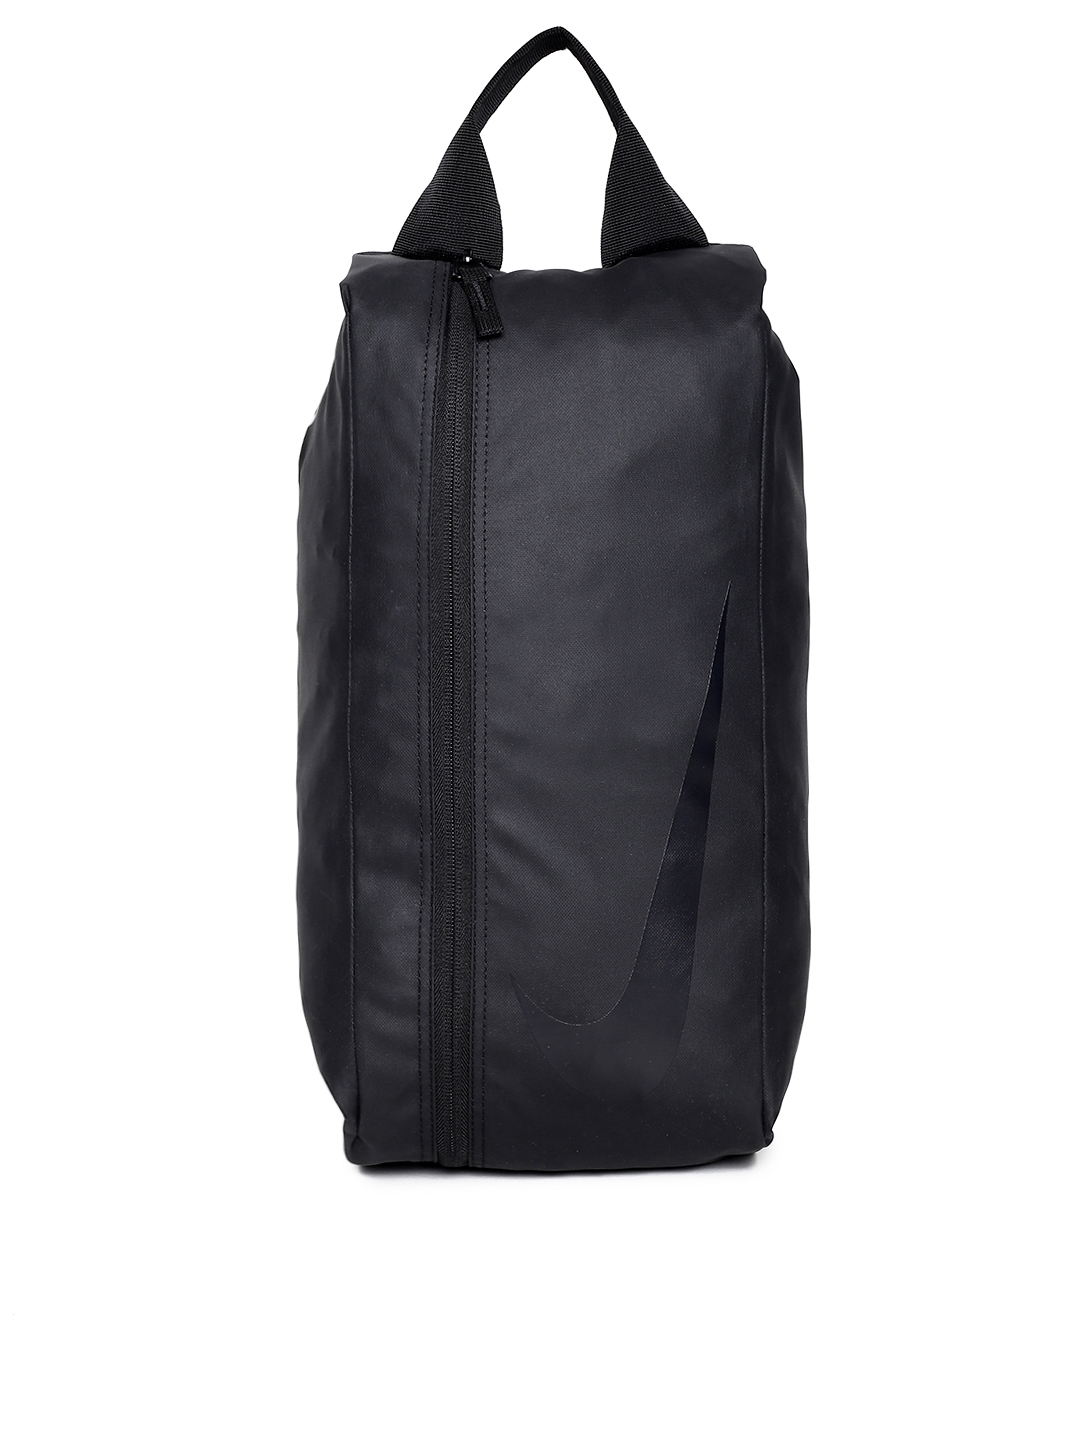 For 447/-(50% Off) Nike Men Black Solid Backpack at Myntra